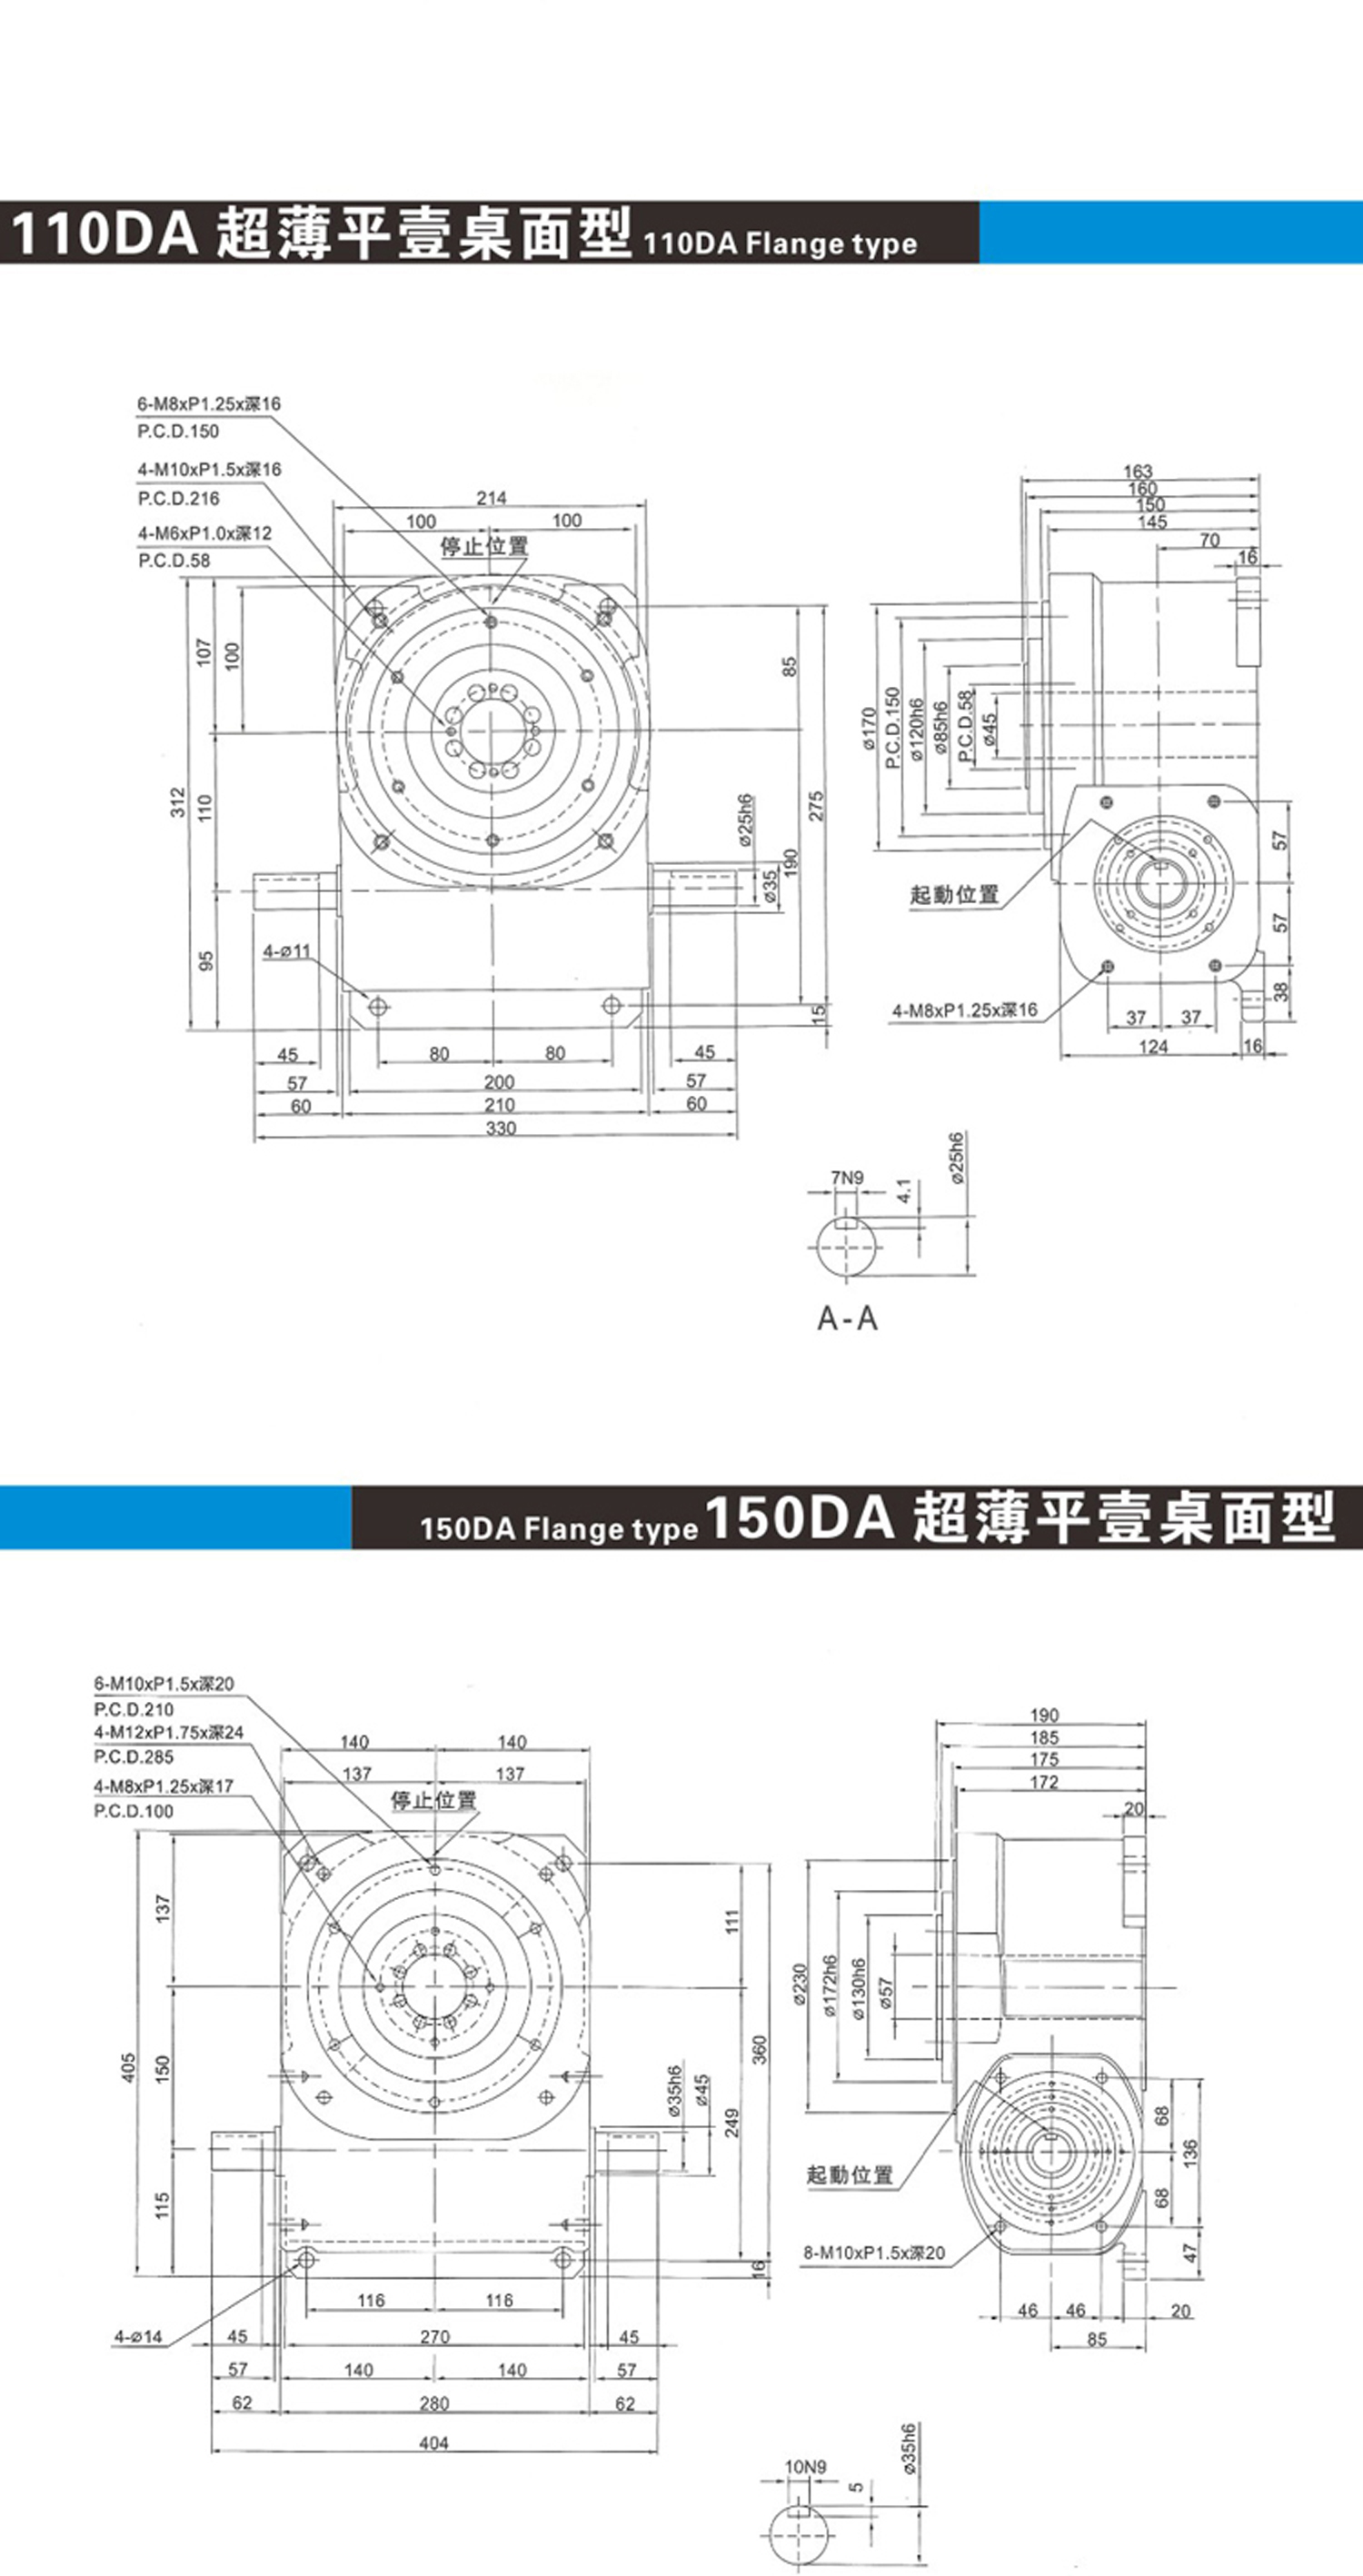 ADDKA凸轮分割器DA系列.jpg